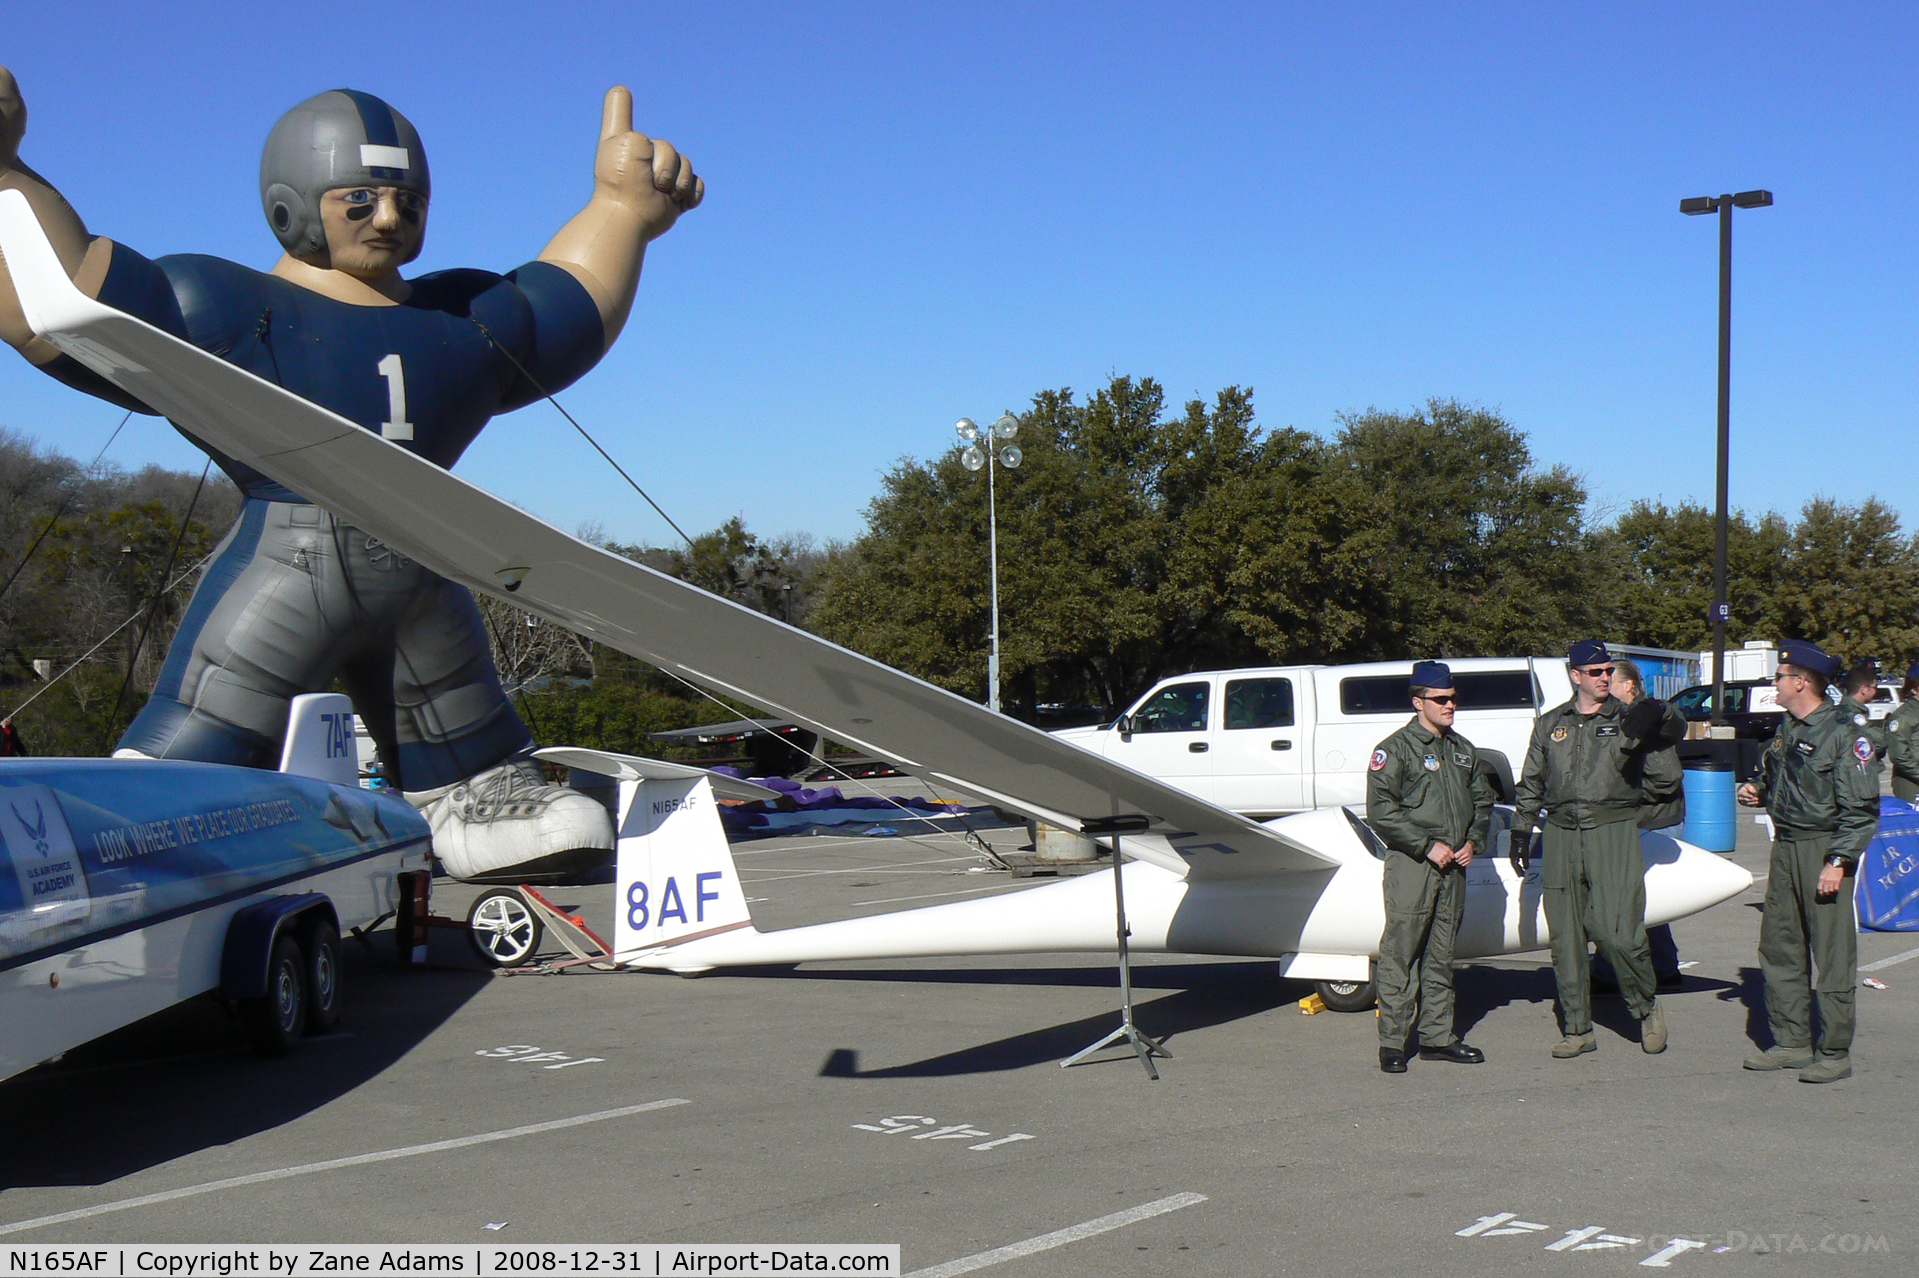 N165AF, 2003 Schempp-Hirth Discus 2b C/N 187, USAF Academy glider at the 2008 Armed Forces Bowl display.